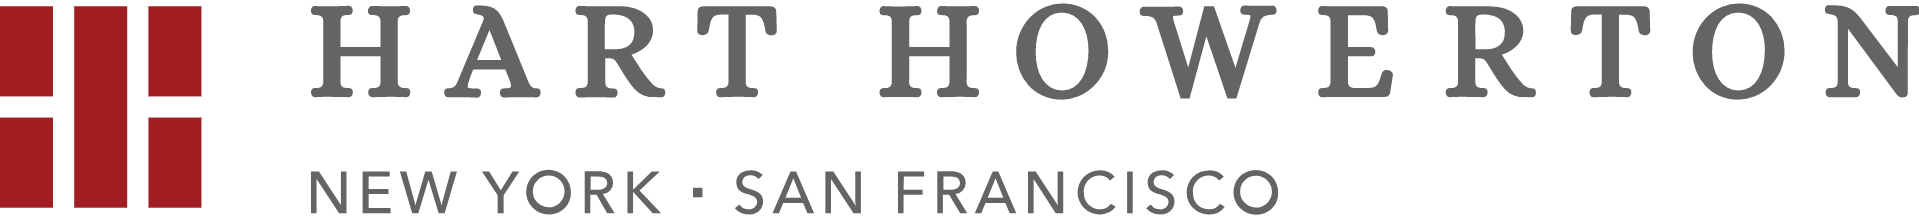 hart howerton logo